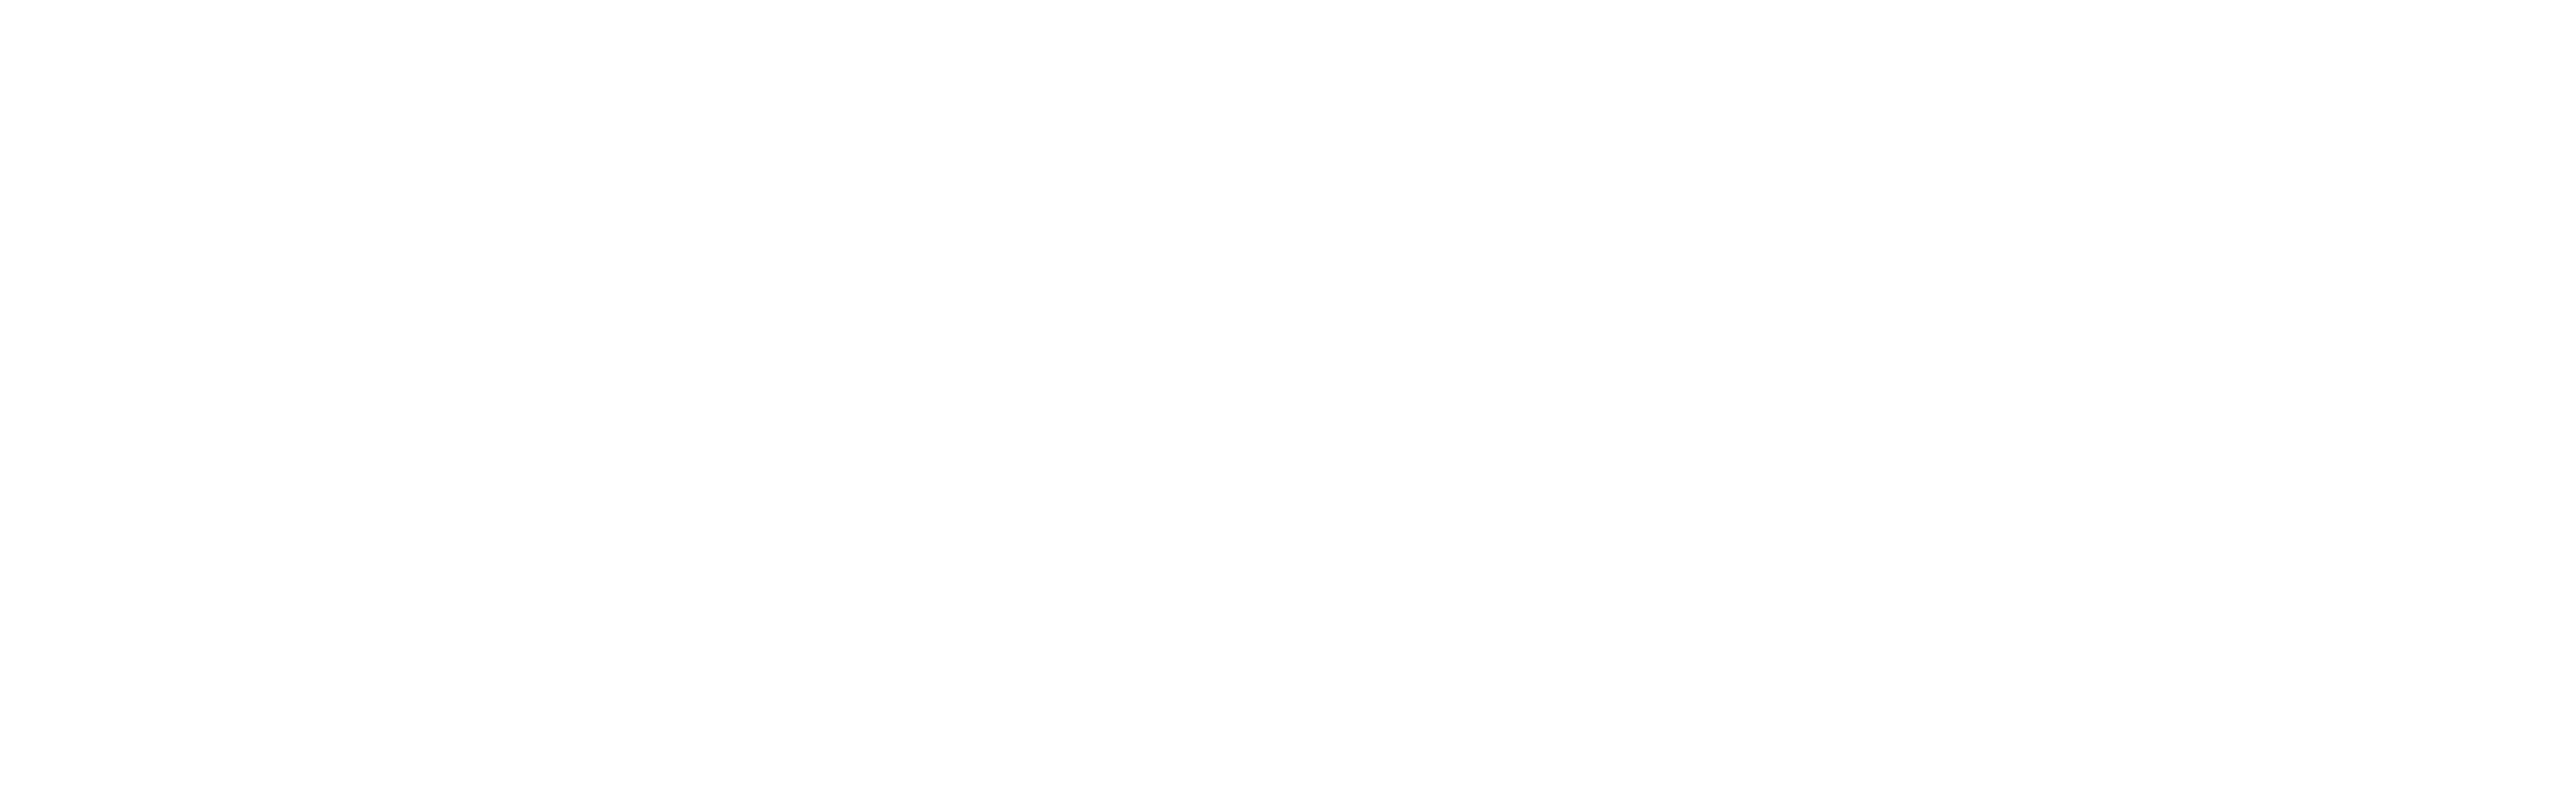 teaching, idea, customer success icons